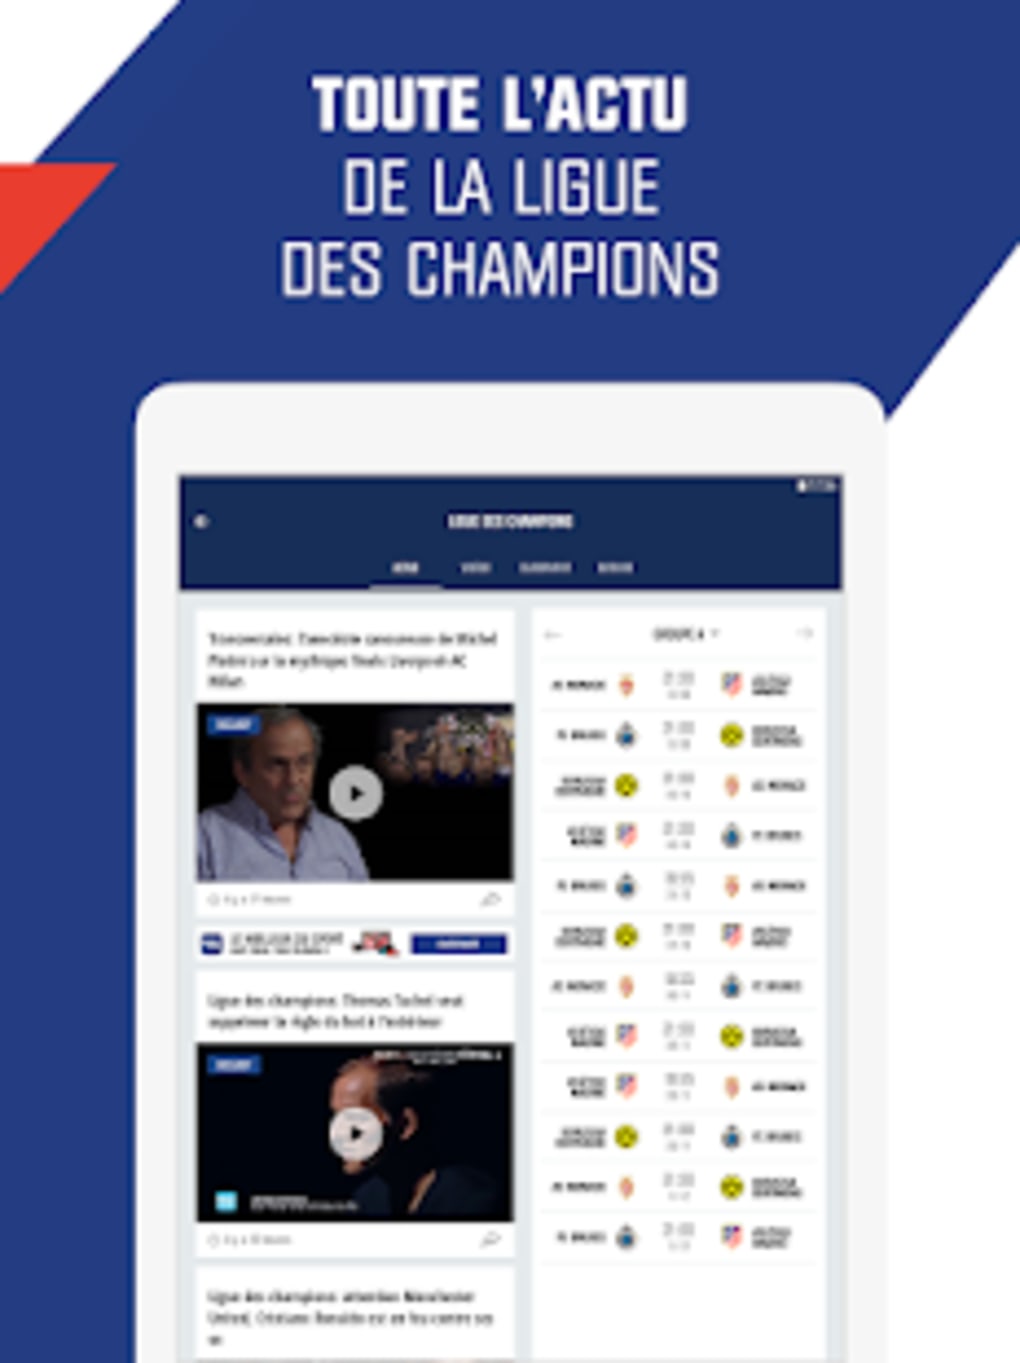 RMC Sport News - Actu Foot et Sport en direct APK para Android - Download